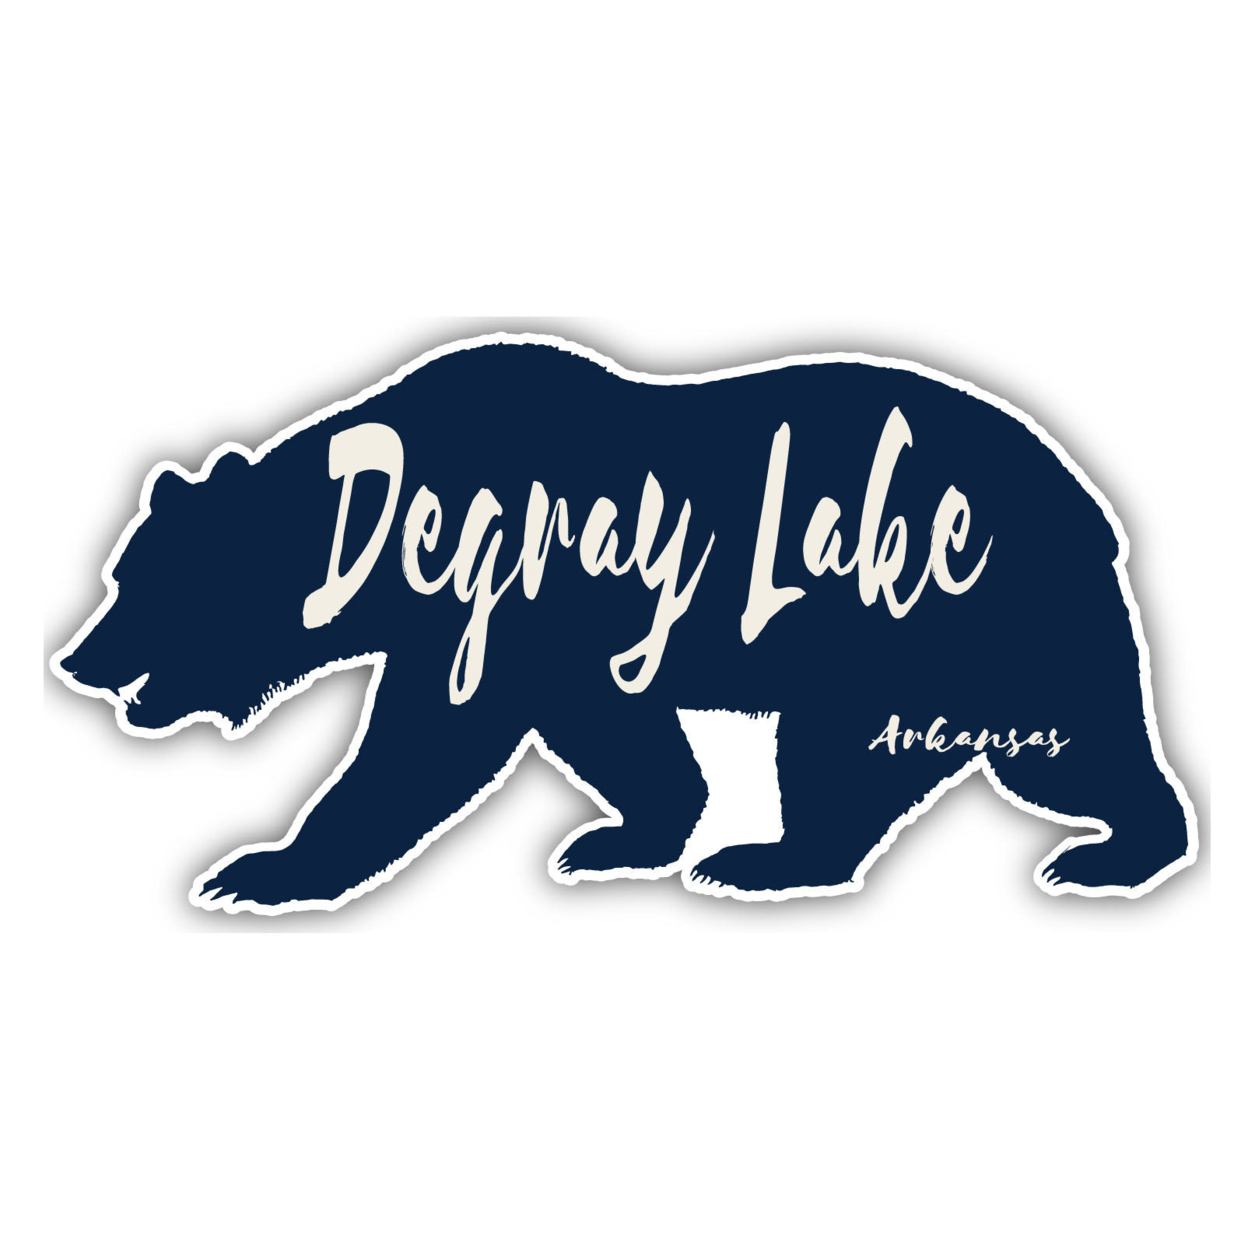 DeGray Lake Arkansas Souvenir Decorative Stickers (Choose Theme And Size) - Single Unit, 6-Inch, Tent